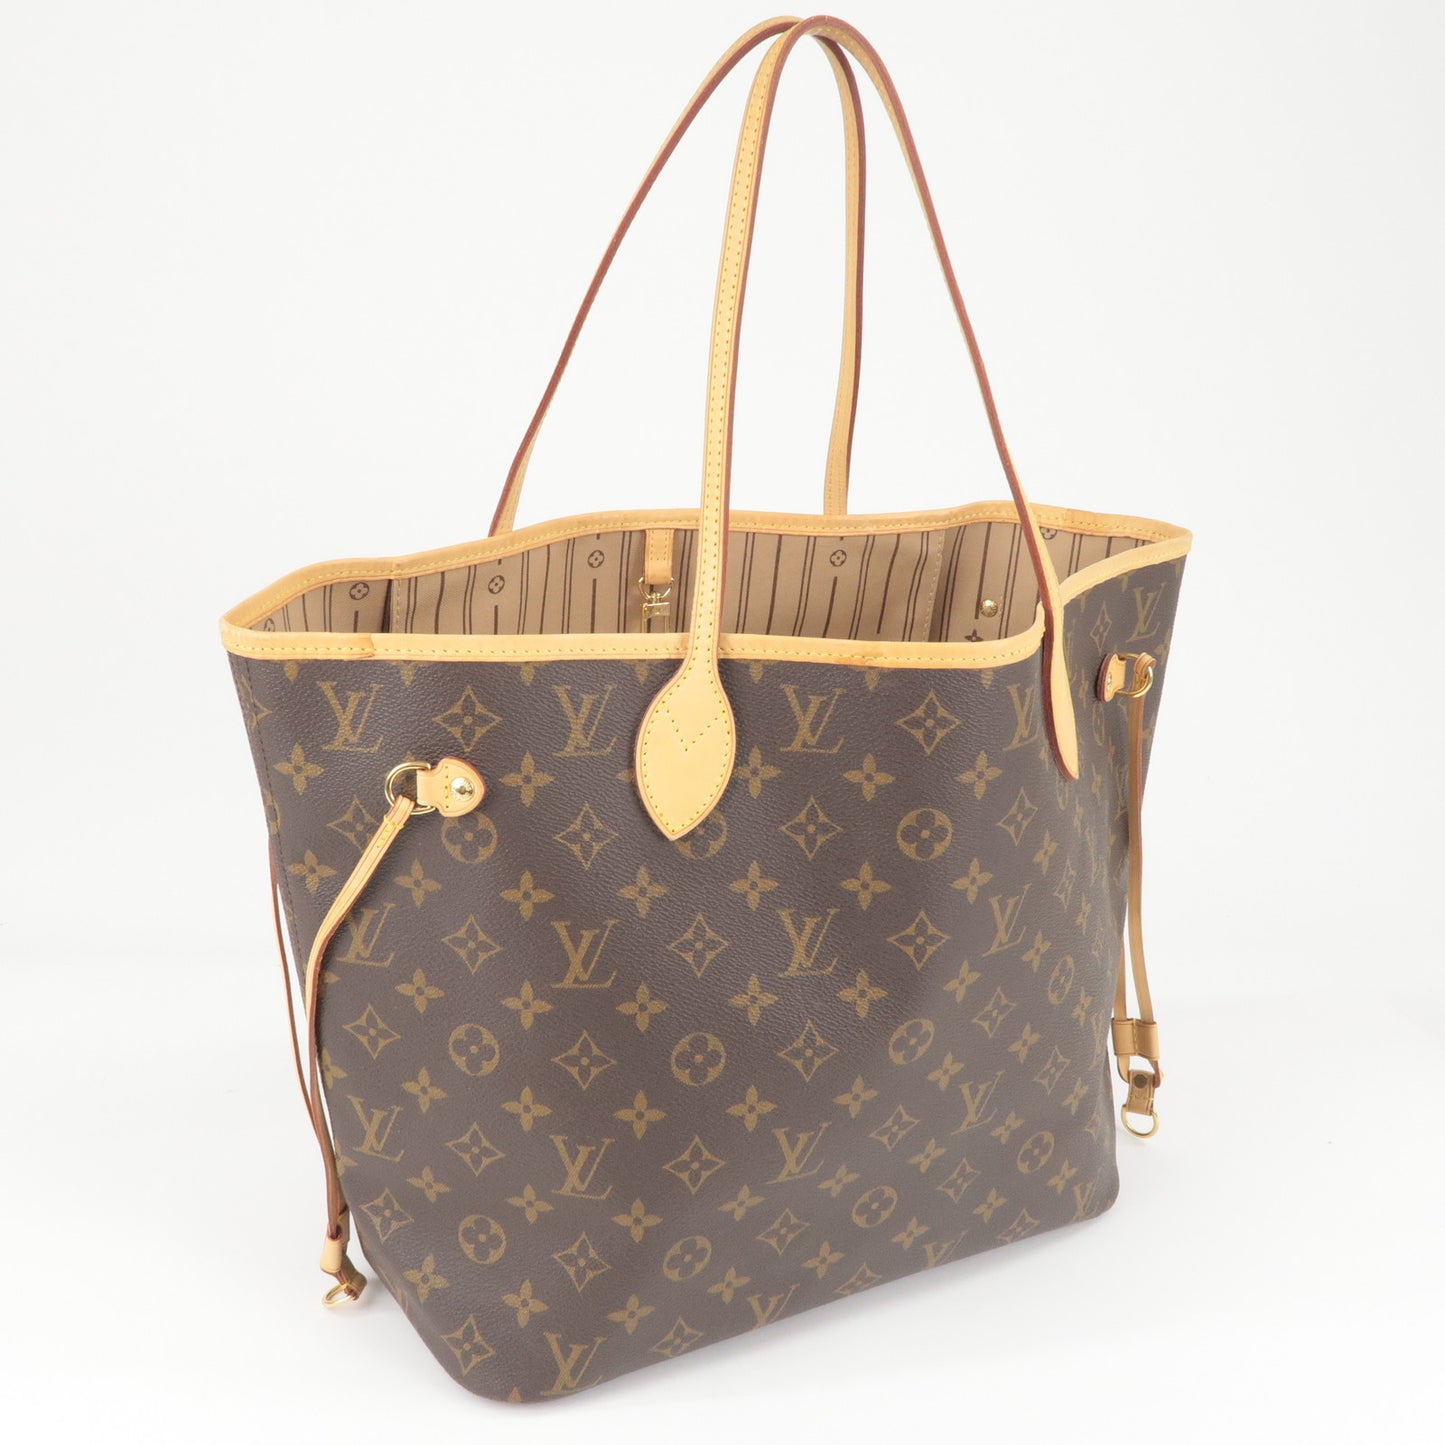 GORGEOUS Louis Vuitton Neverfull MM Monogram Handbag (barely used